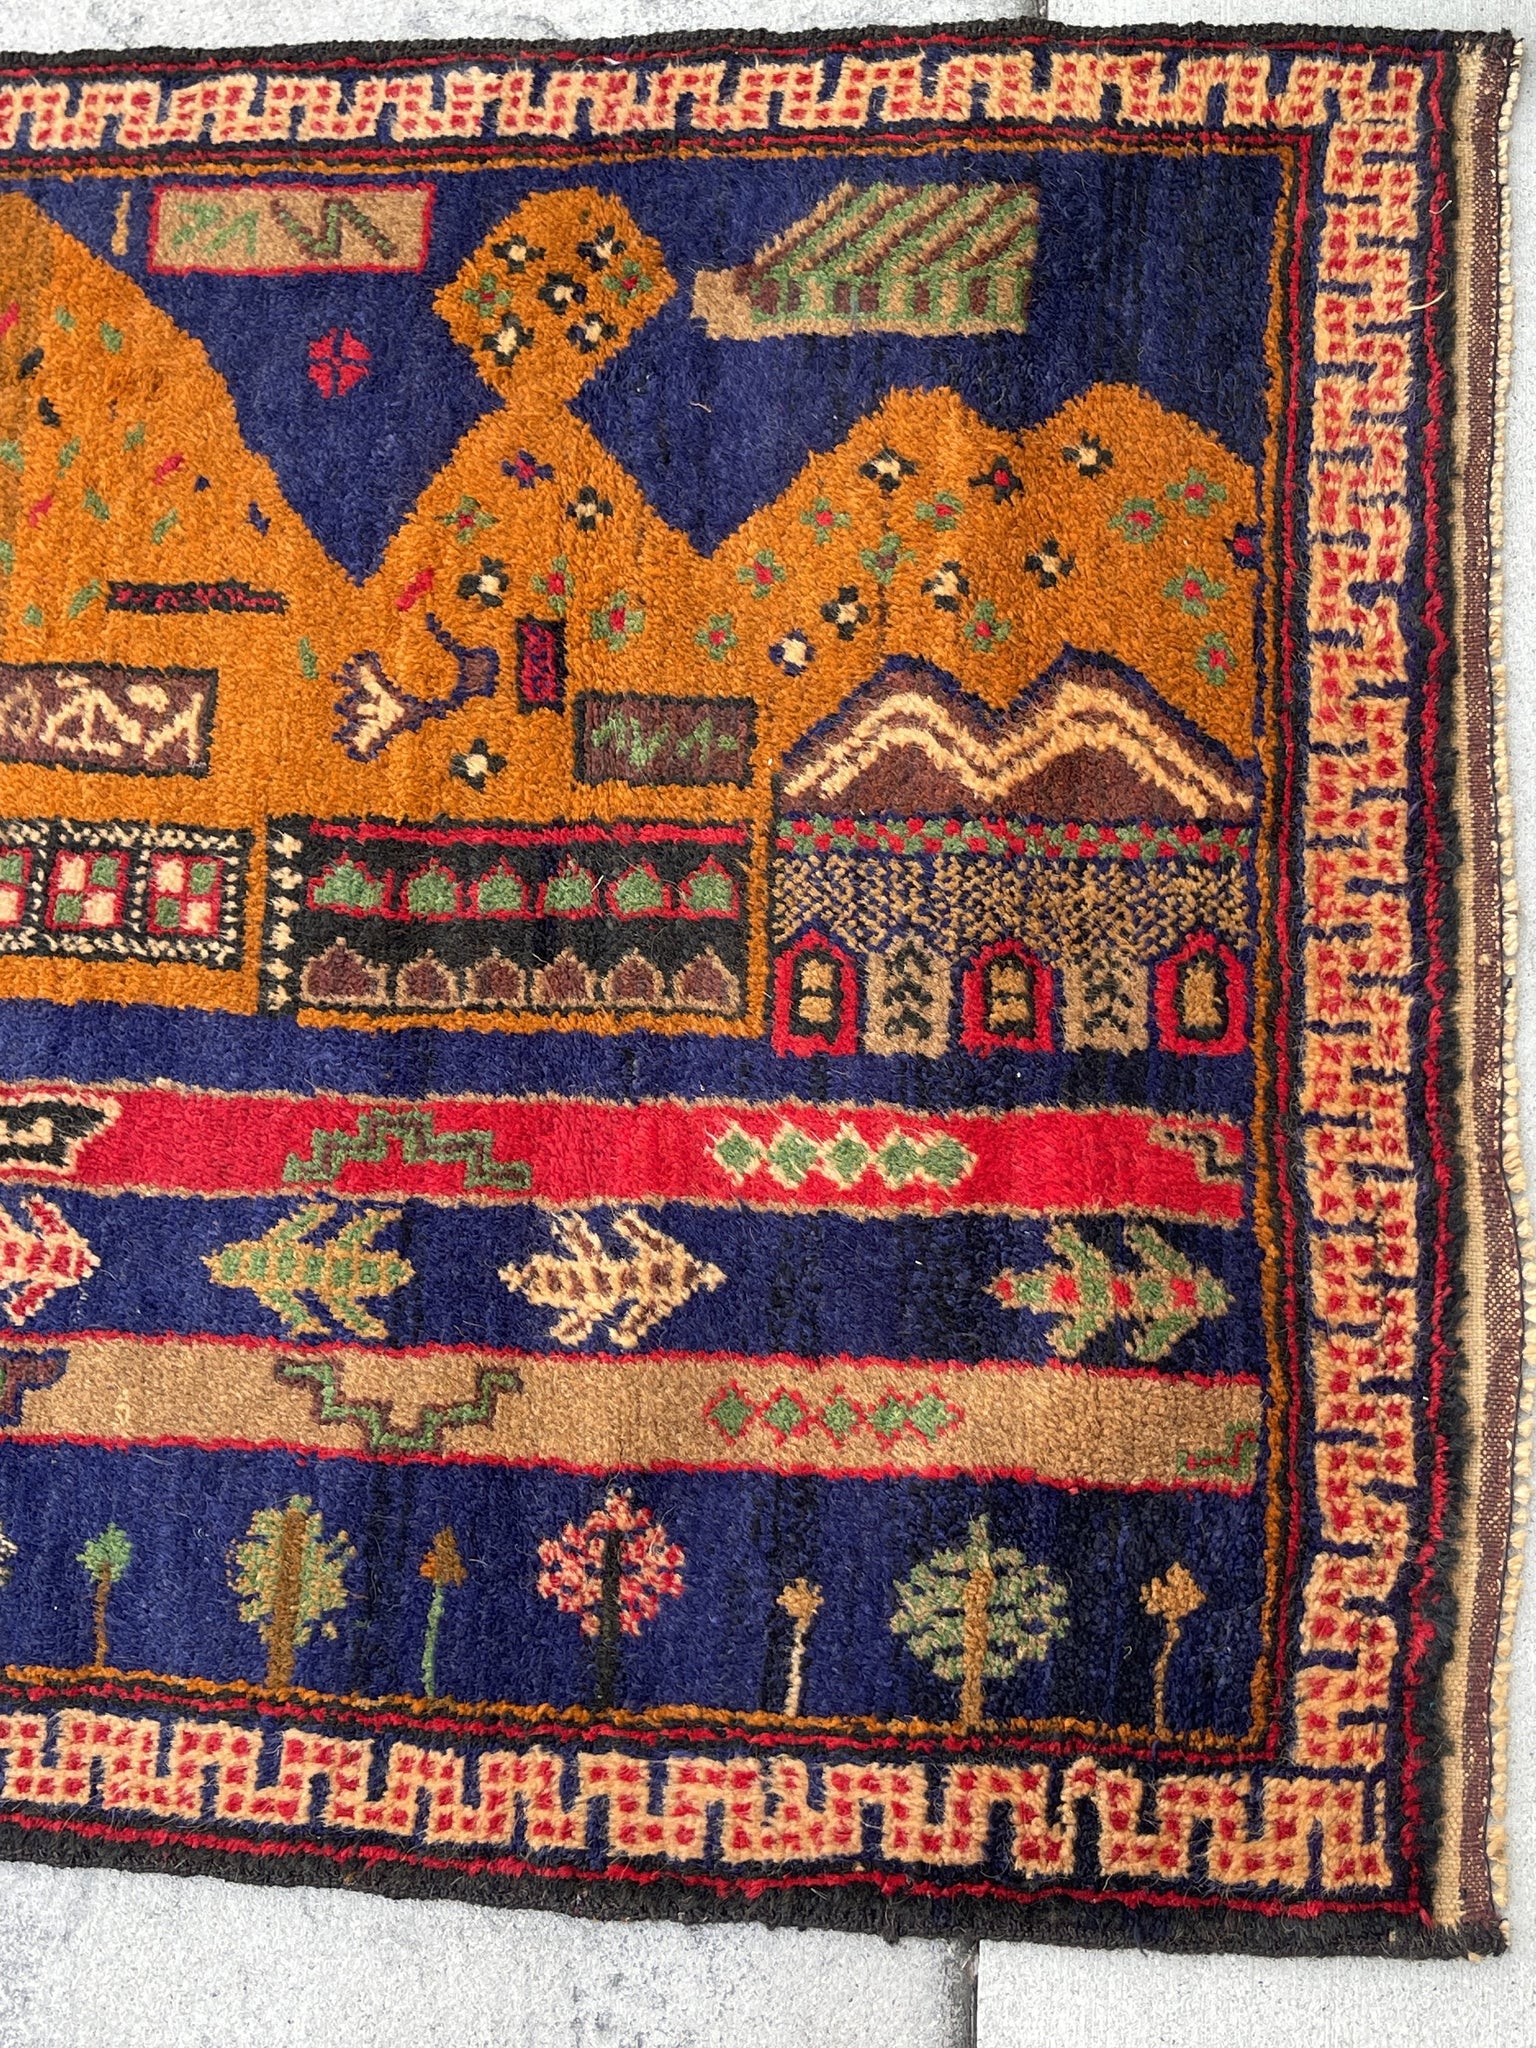 3x5 (90x150) Handmade Vintage Afghan Rug | Navy Blue Orange Red Green | Nomadic Baluch Boho Bohemian Tribal Turkish Moroccan Wool